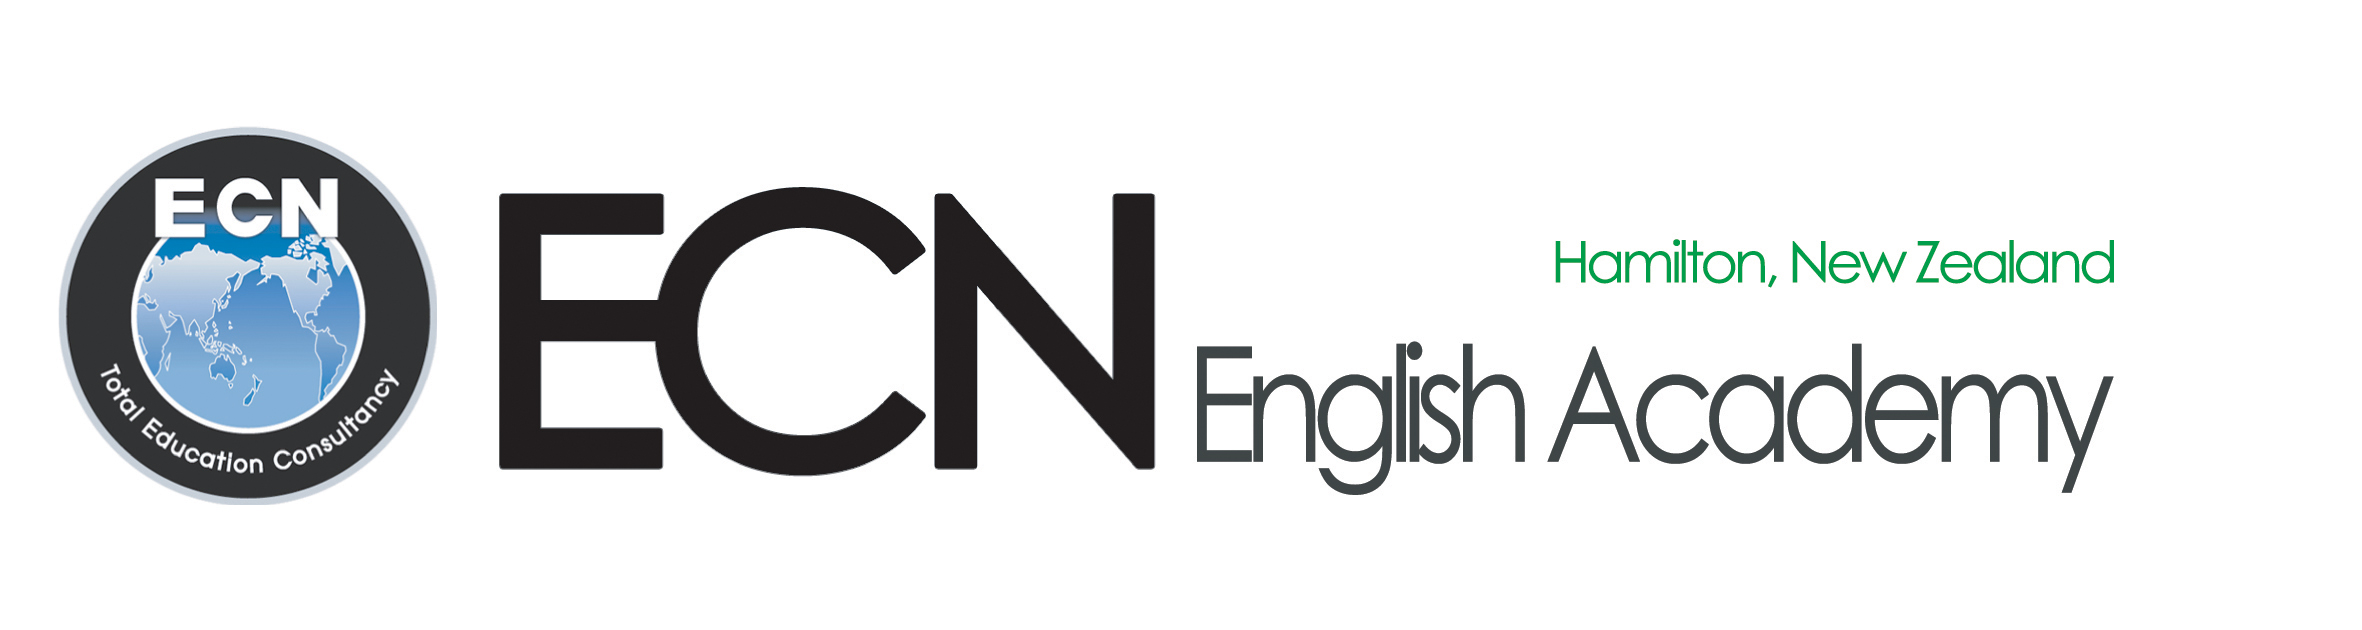 ECN English Academy New Logo-OCT08-1-CMYK.jpg